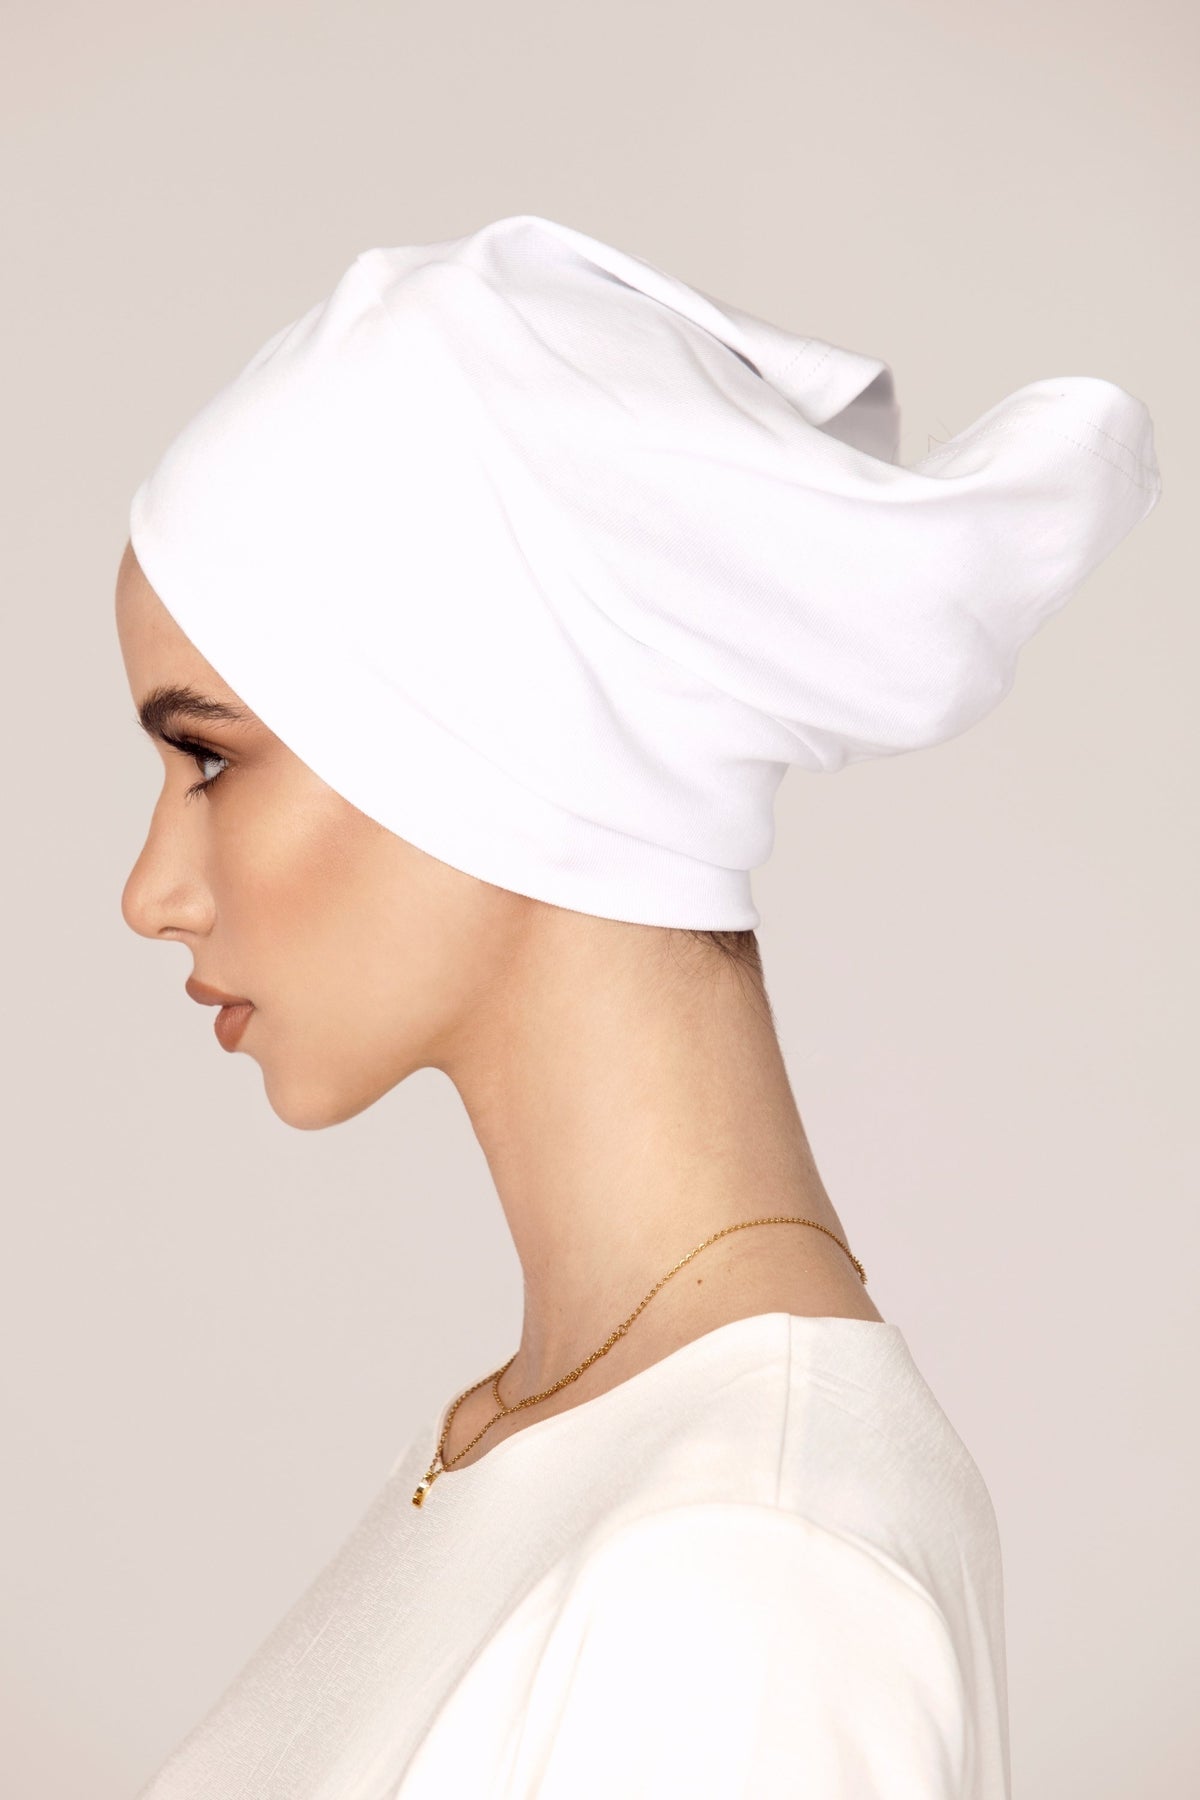 Hijab Undercaps, Hijab Underpiece, Tie-back Undercap, Islamic